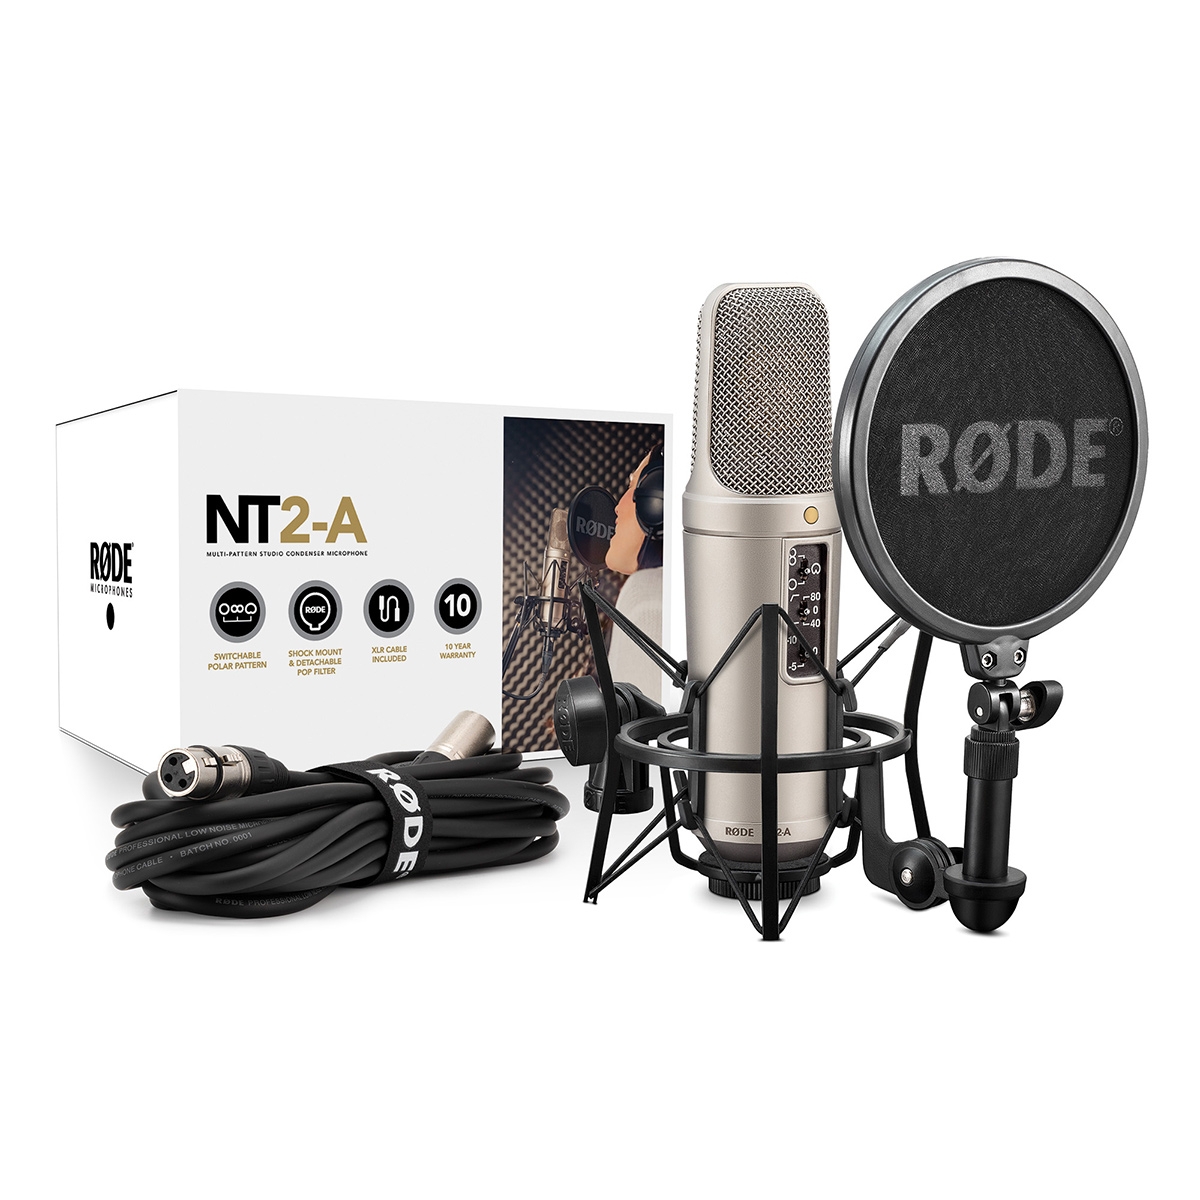 Rode NT-2A " Studio solution " Set